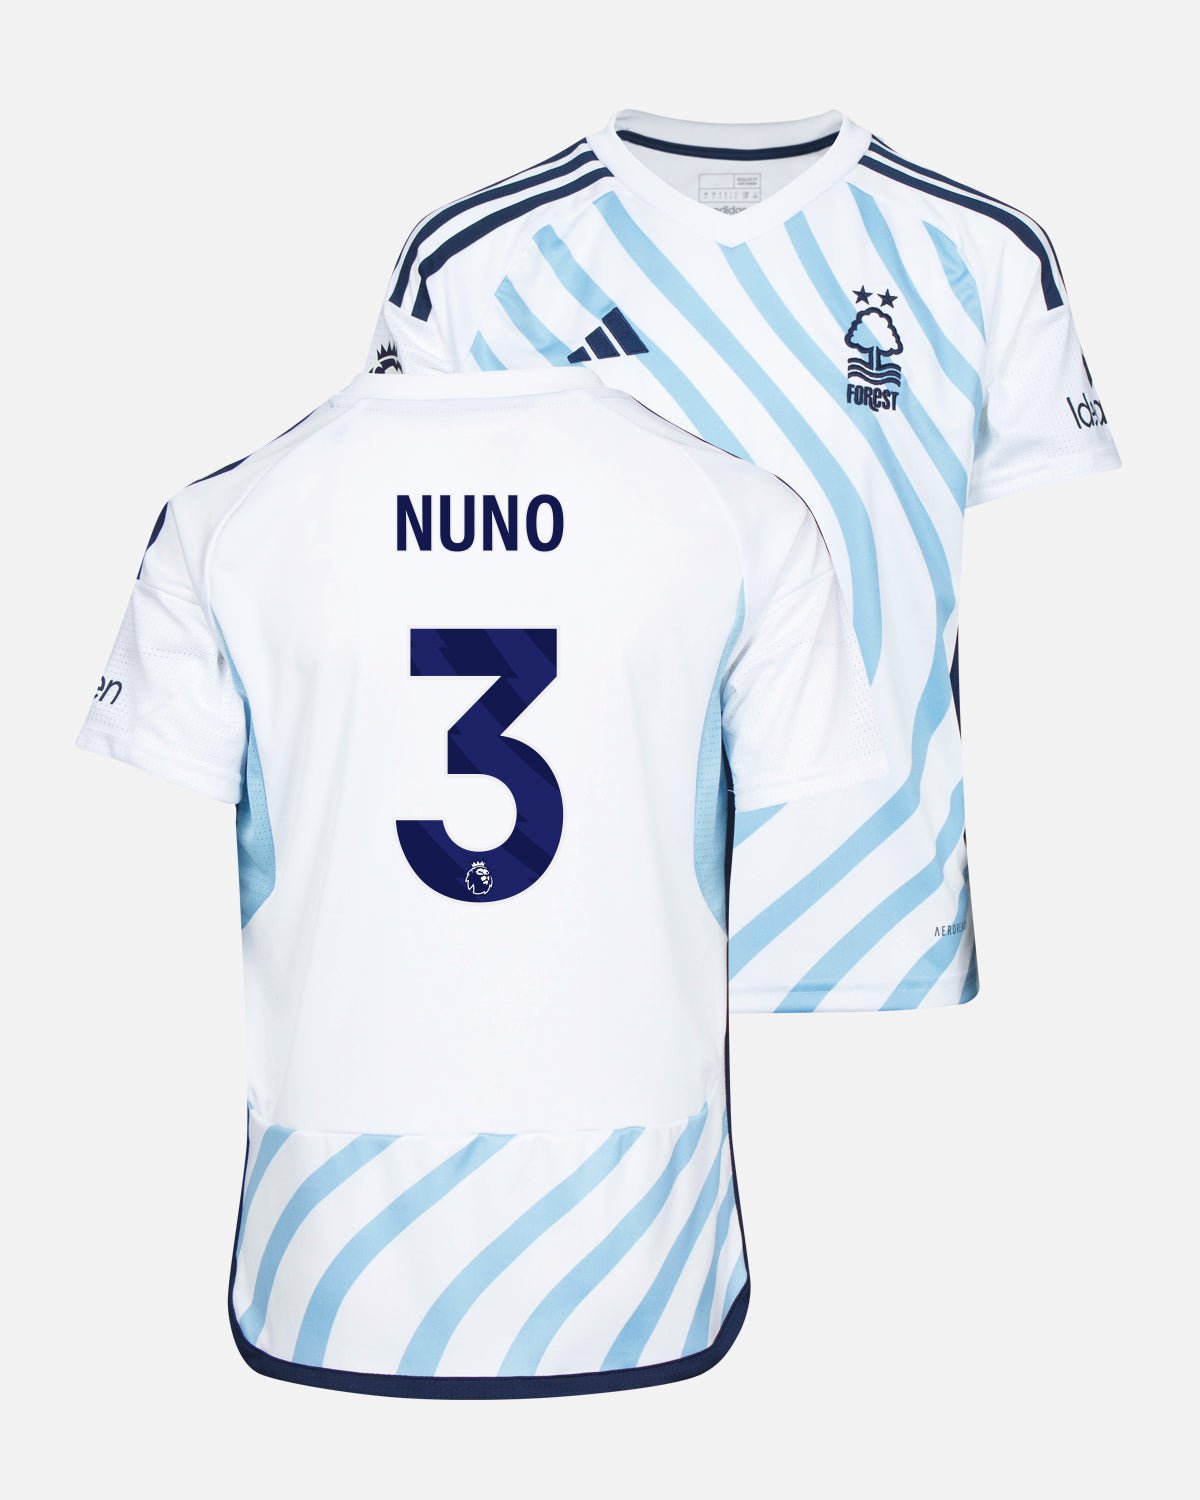 NFFC Junior Away Shirt 23-24 - Nuno 3 - Nottingham Forest FC